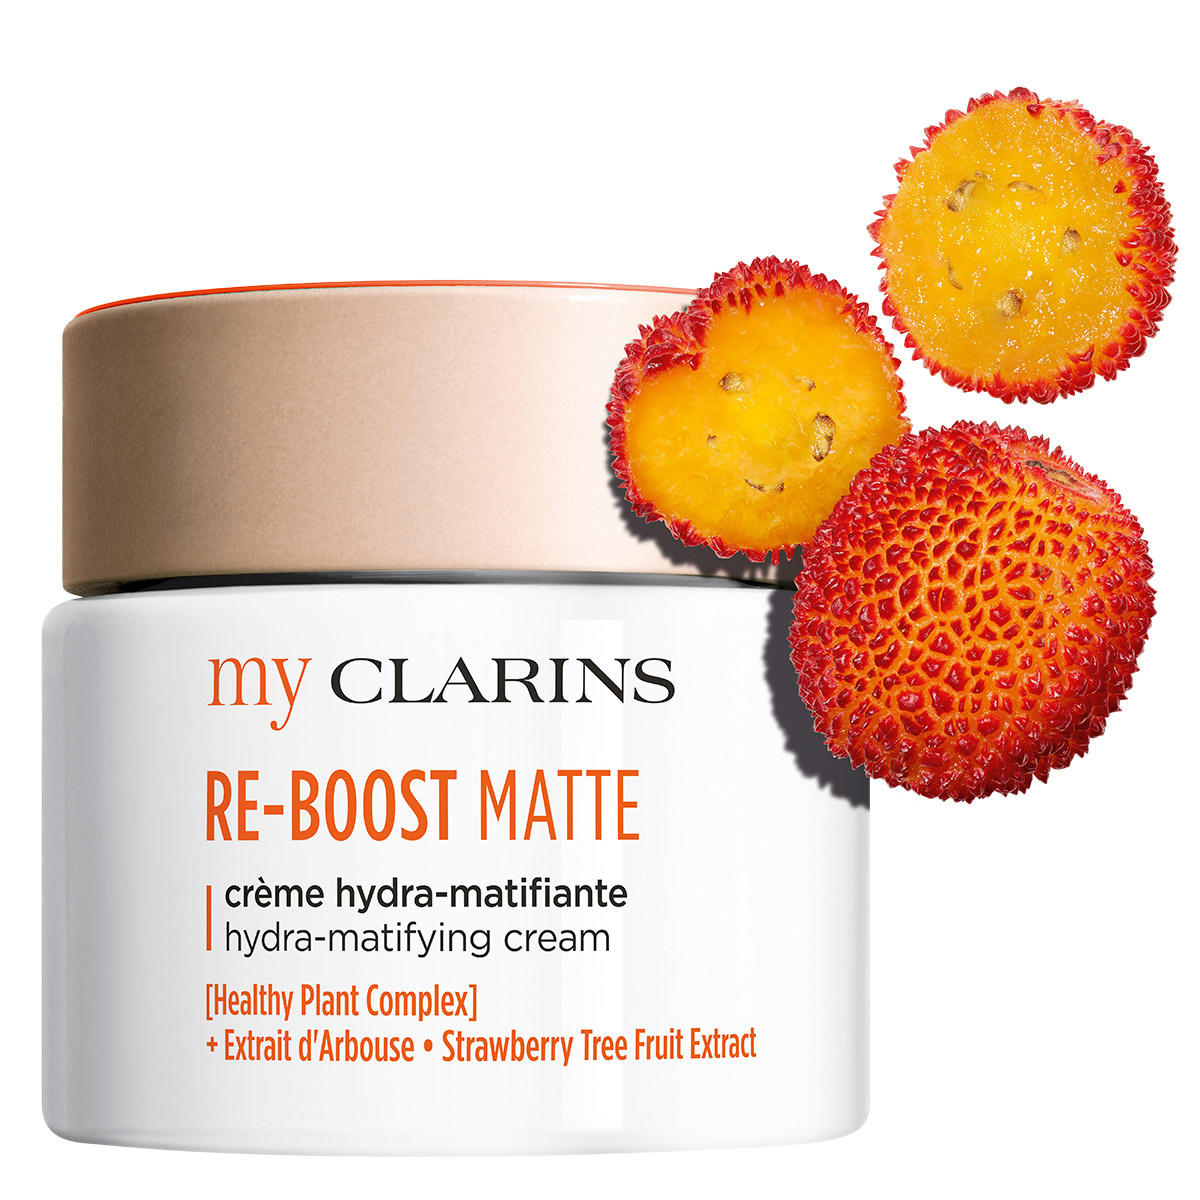 CLARINS myCLARINS Re-Boost Matte Hydra-Matifying Cream 50 ml - 2